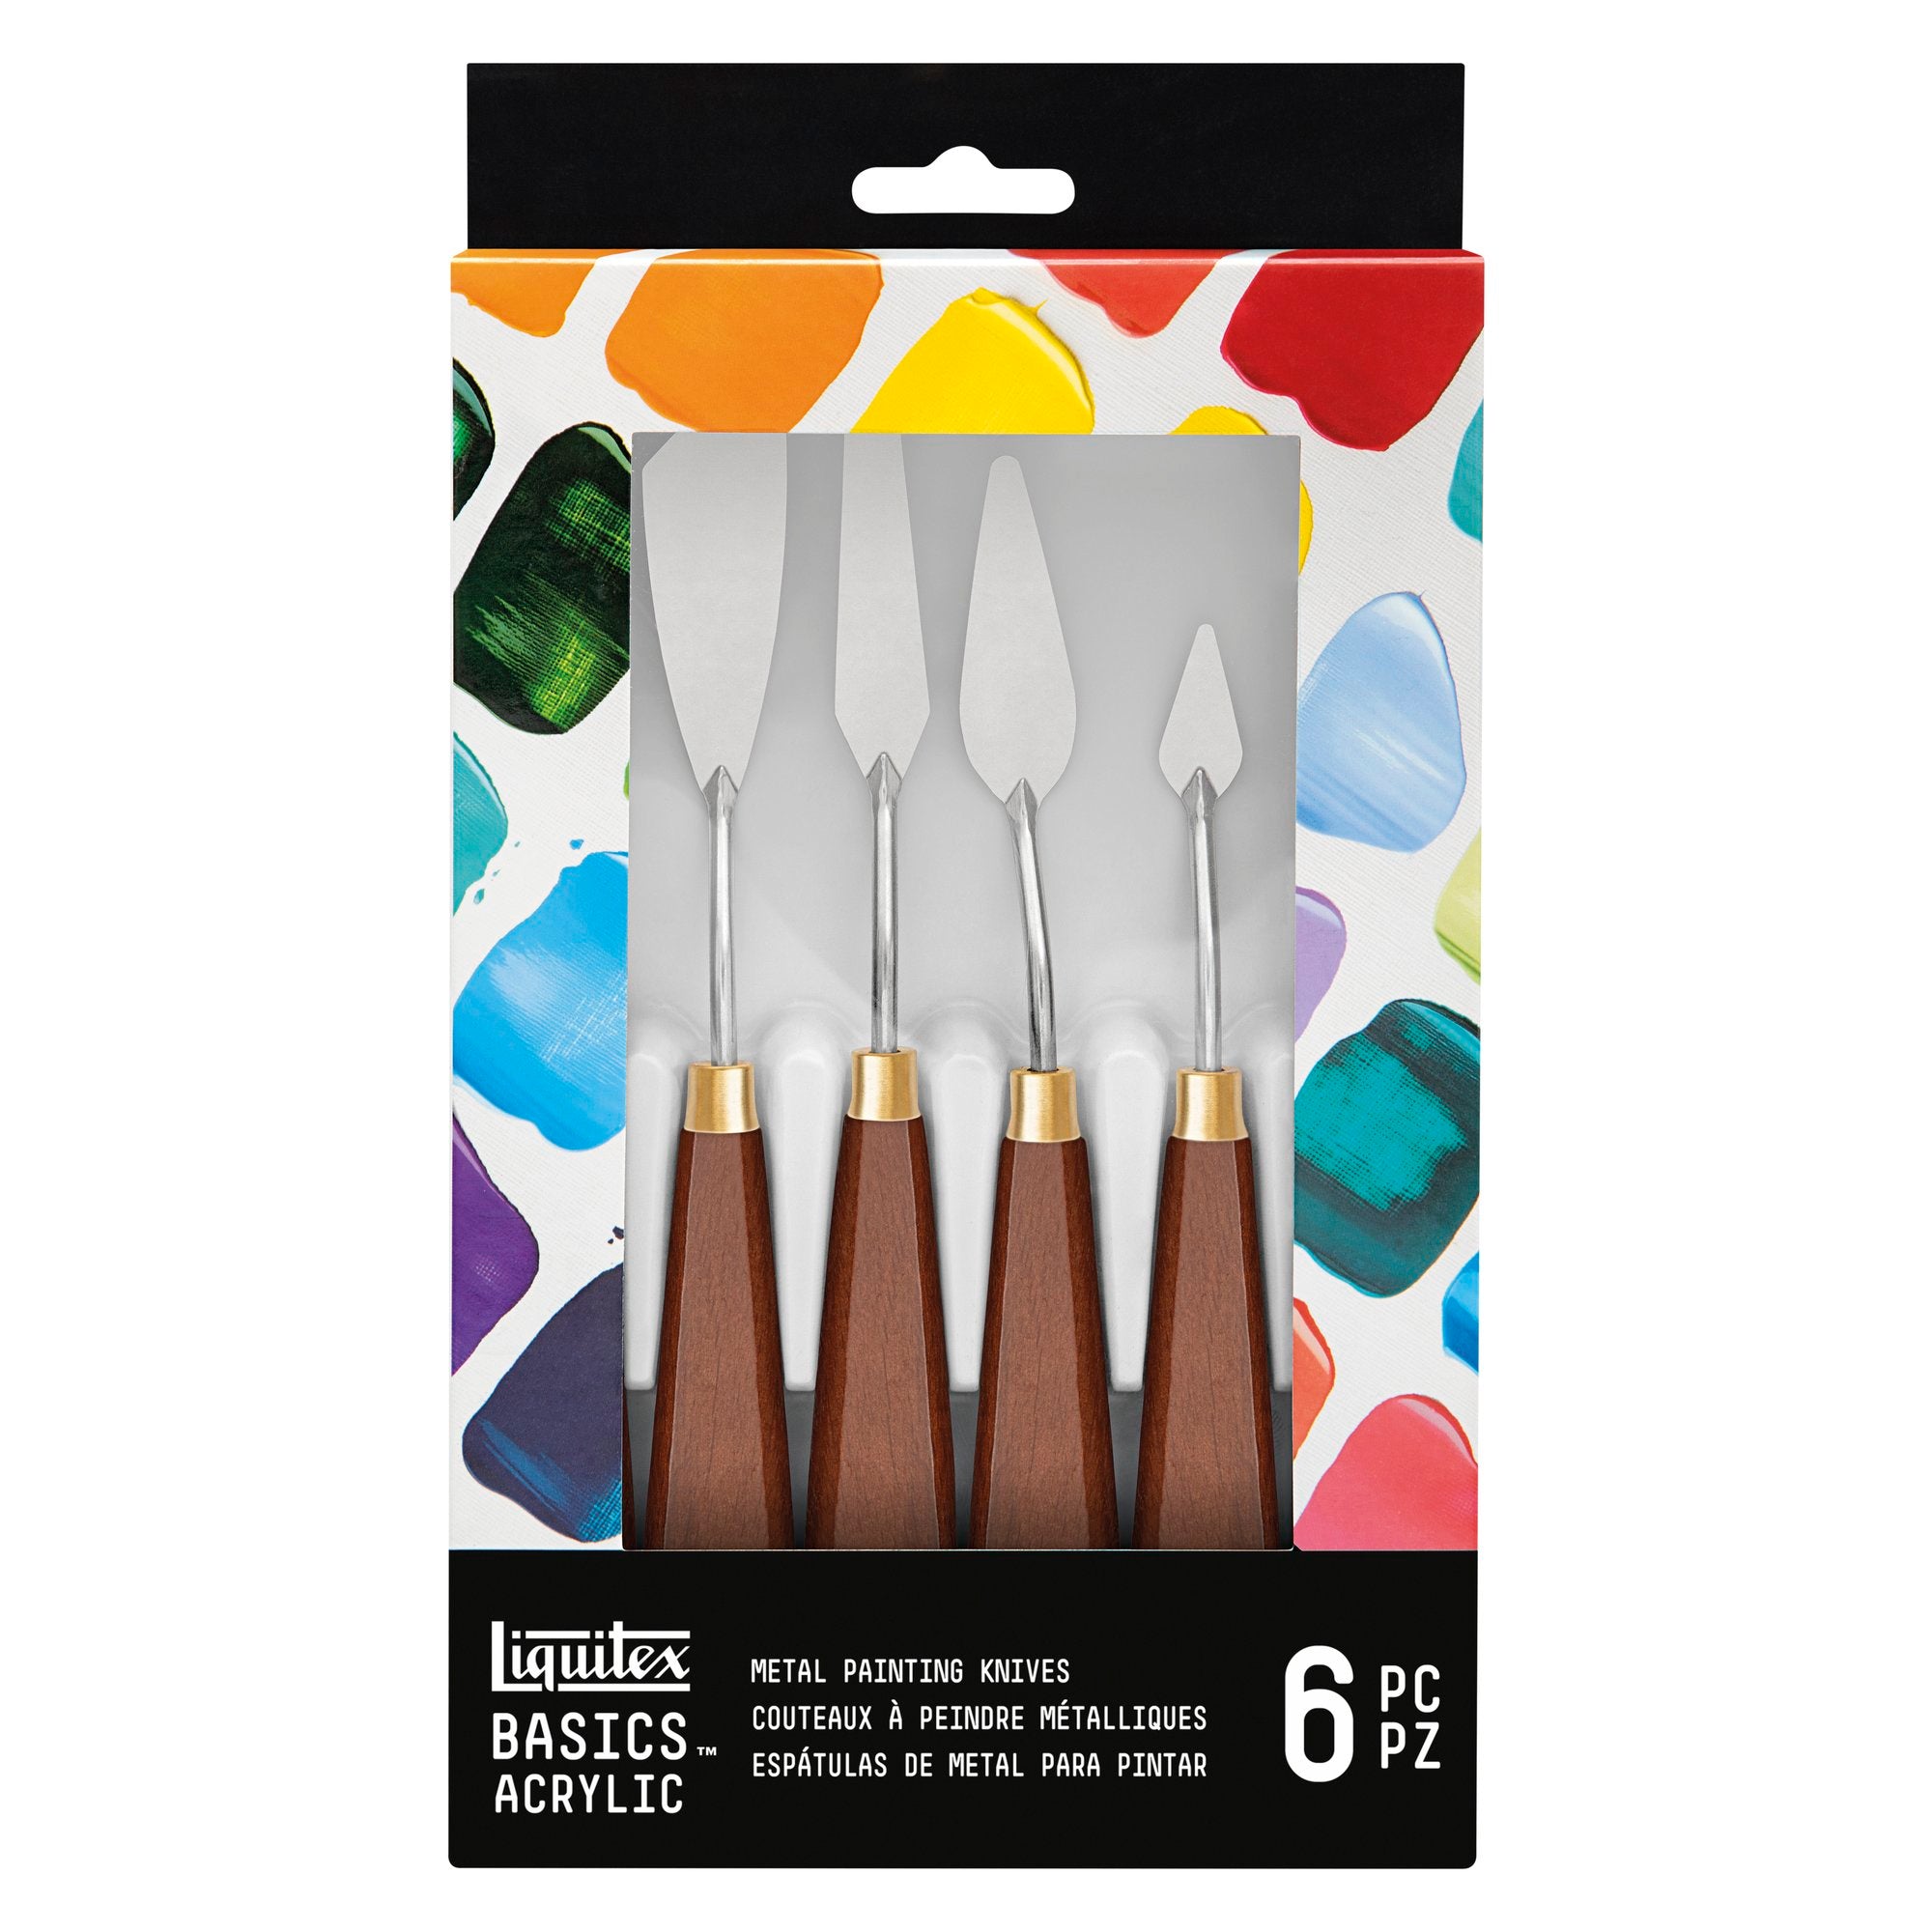 Liquitex Basics Acrylic Metal Painting Knives - Pack of 6